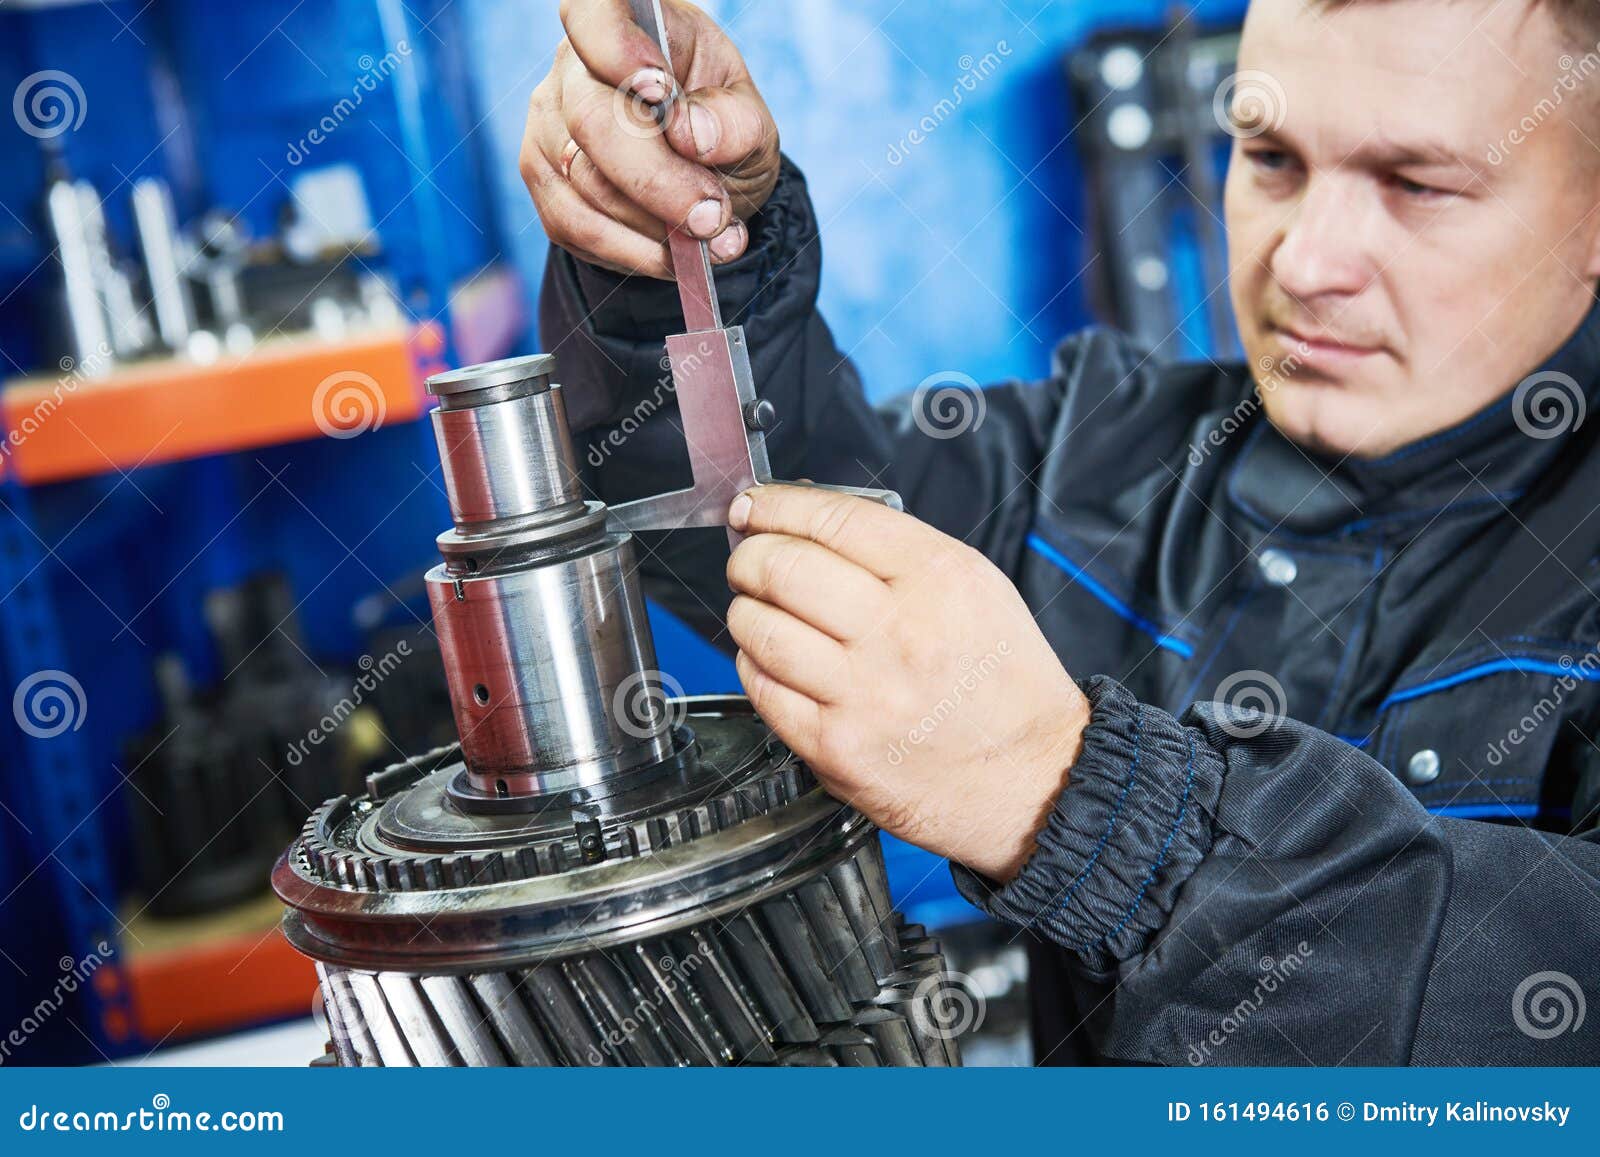 truck repair service. serviceman measuring gear shaft of gearbox